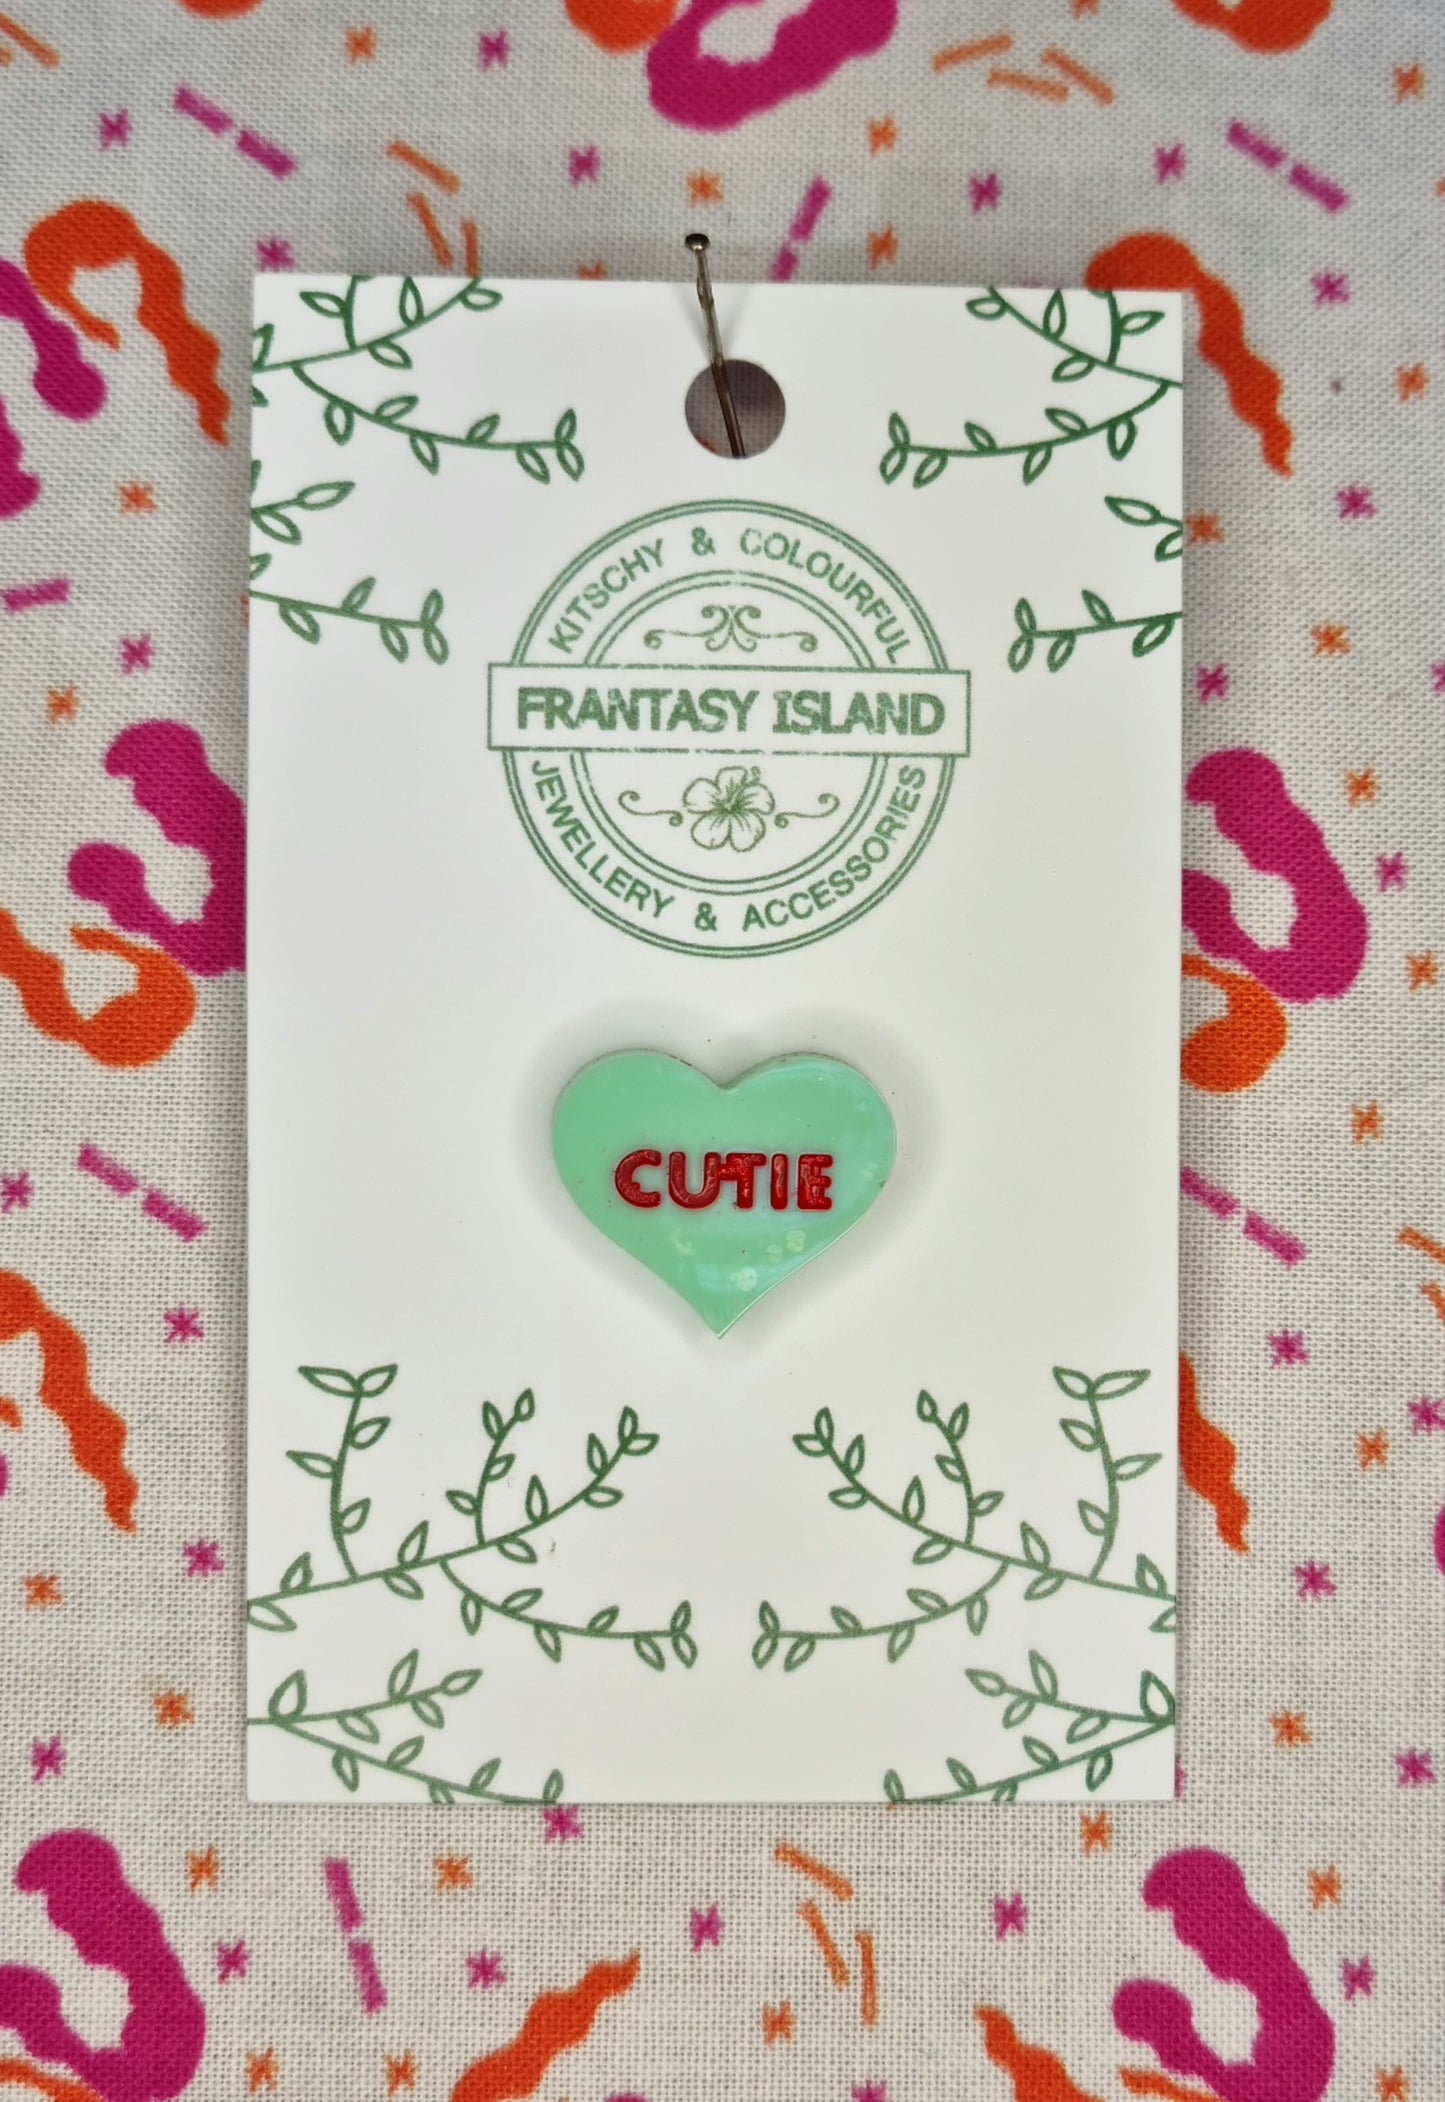 Candy Heart Pins